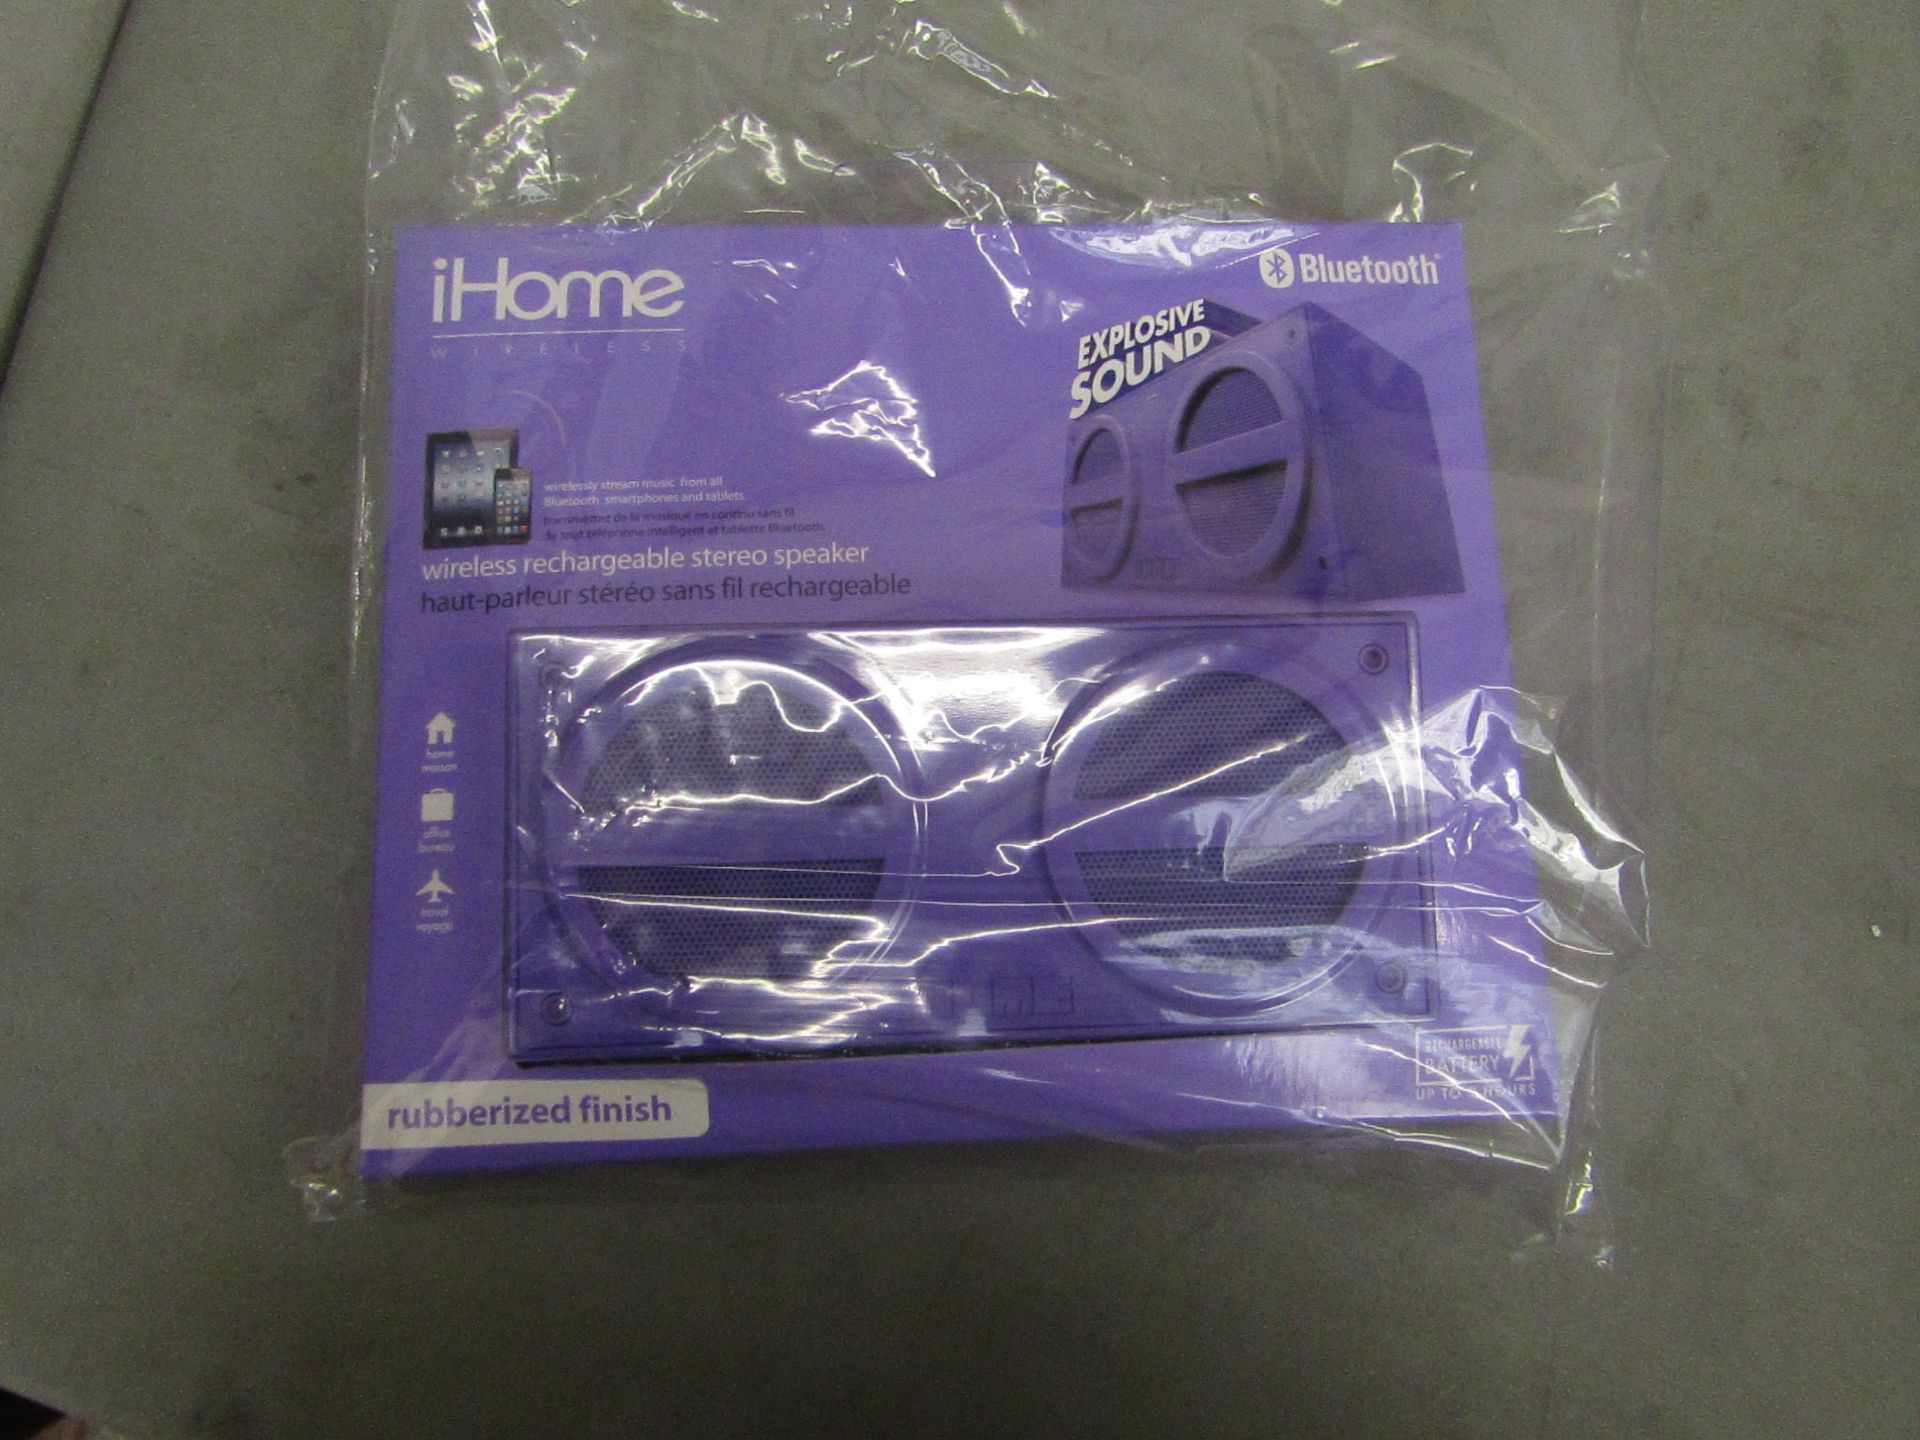 iHome Wireless Rechargable Stereo Speaker. New & Packaged